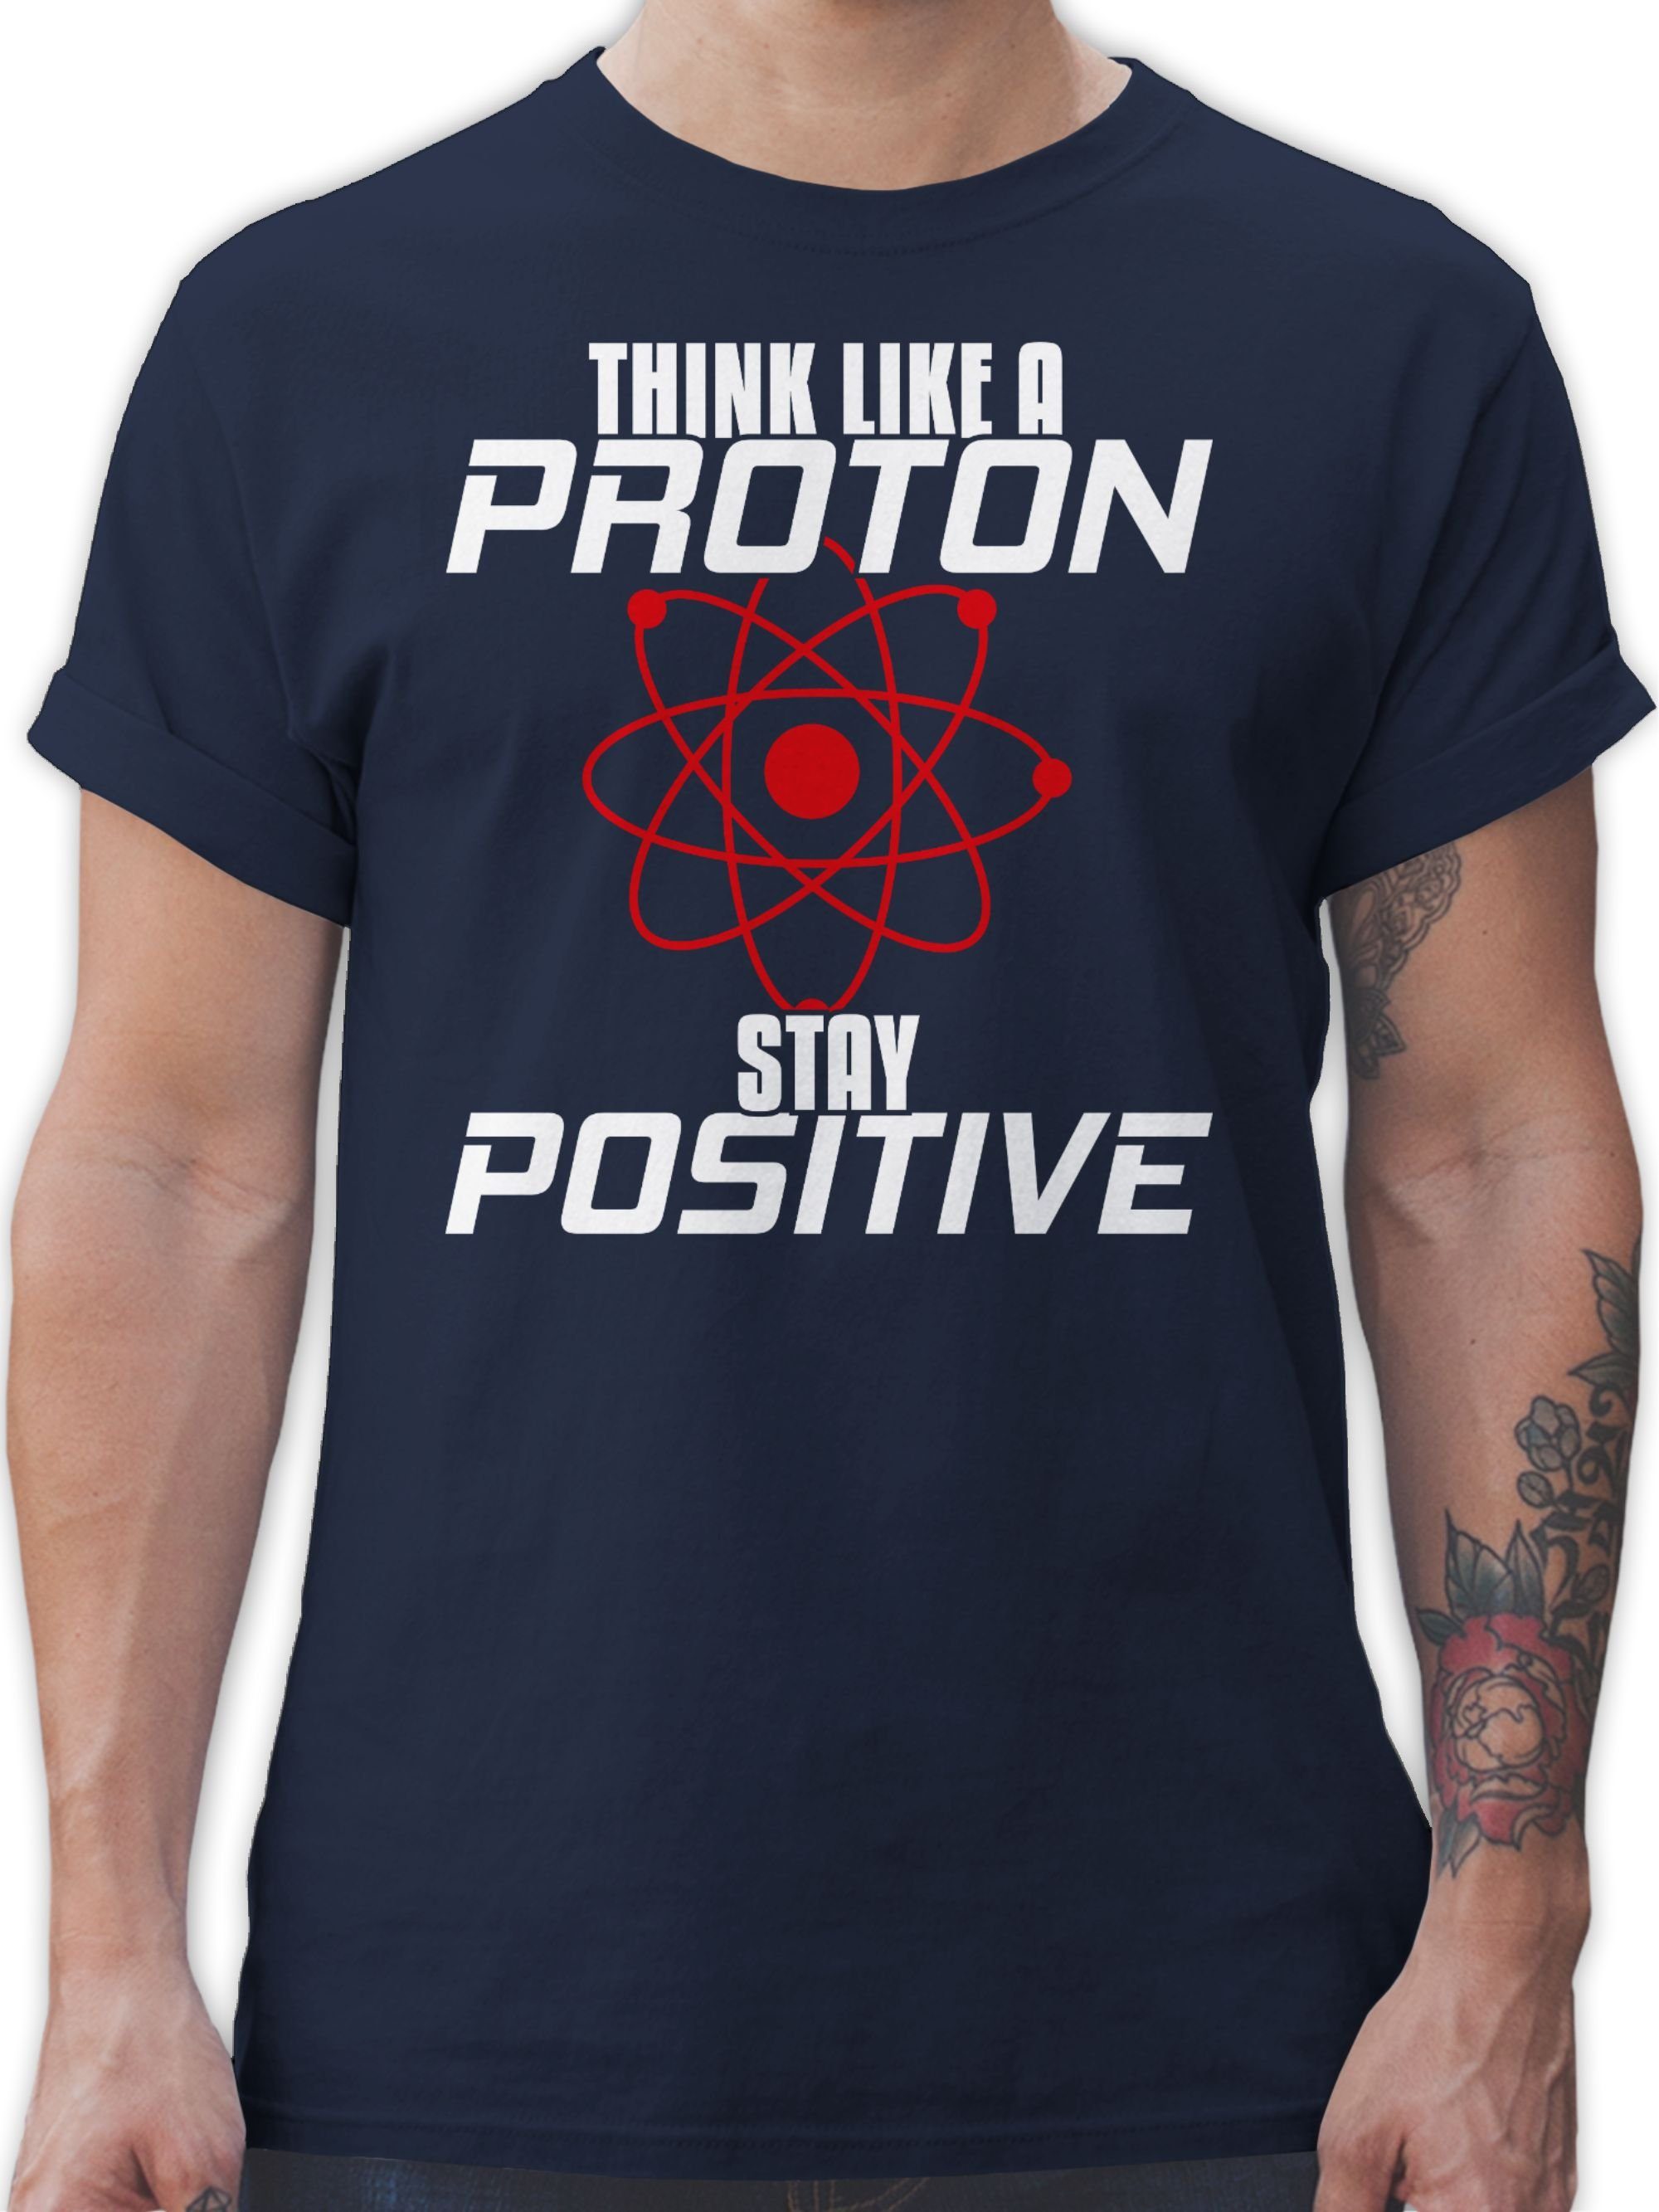 Shirtracer T-Shirt Think like a proton stay positive Nerd Geschenke 2 Navy Blau